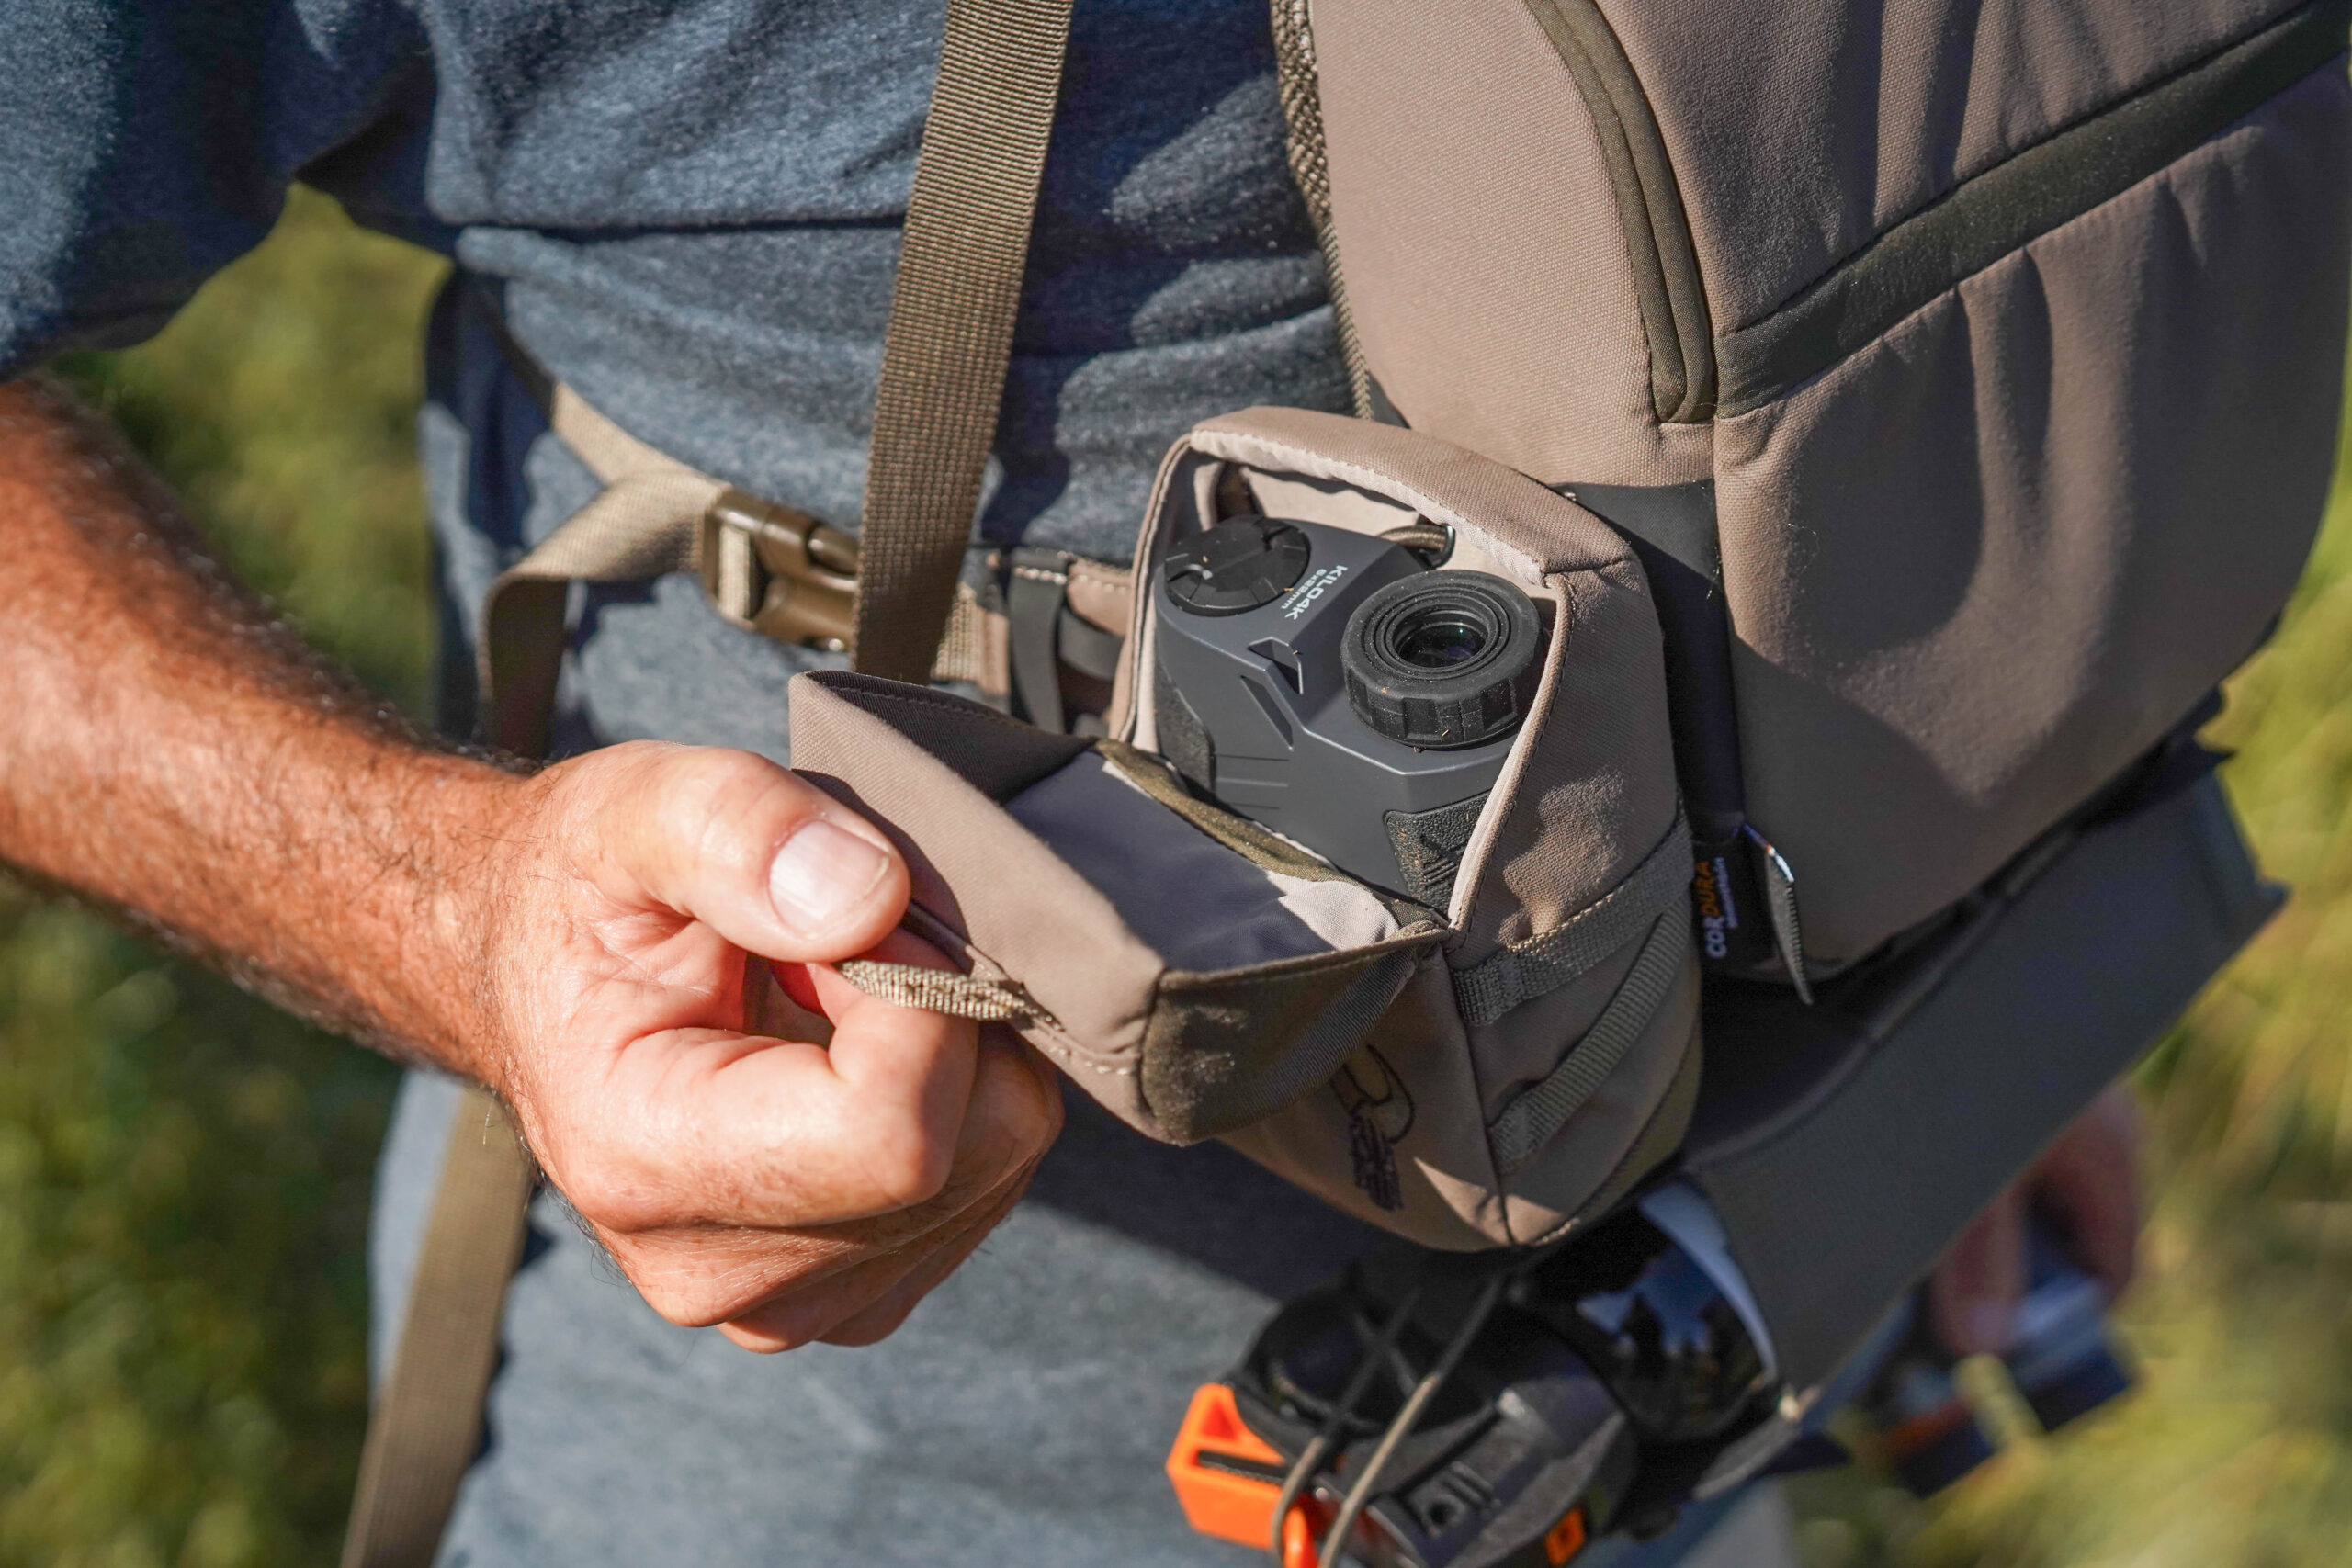 The badlands rangefinder pouch for the binocular harness.